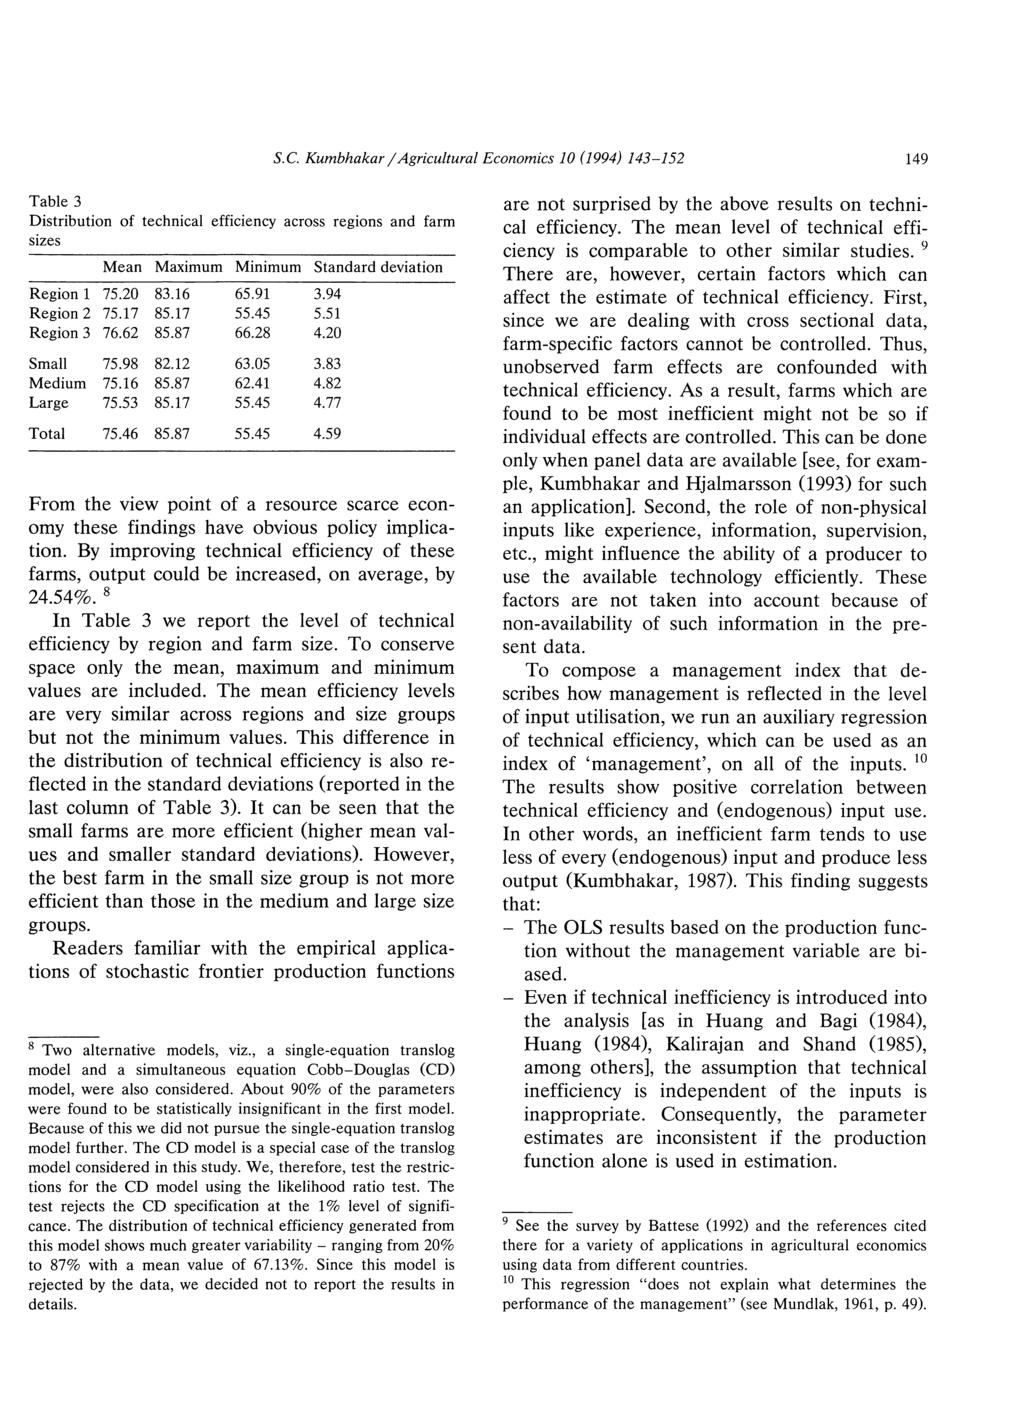 S.C. Kumbhakar 1 Agricultural Economics 10 (1994) 143-152 149 Table 3 Distribution of technical efficiency across regions and farm sizes Mean Maximum Minimum Standard deviation Region 1 75.20 83.